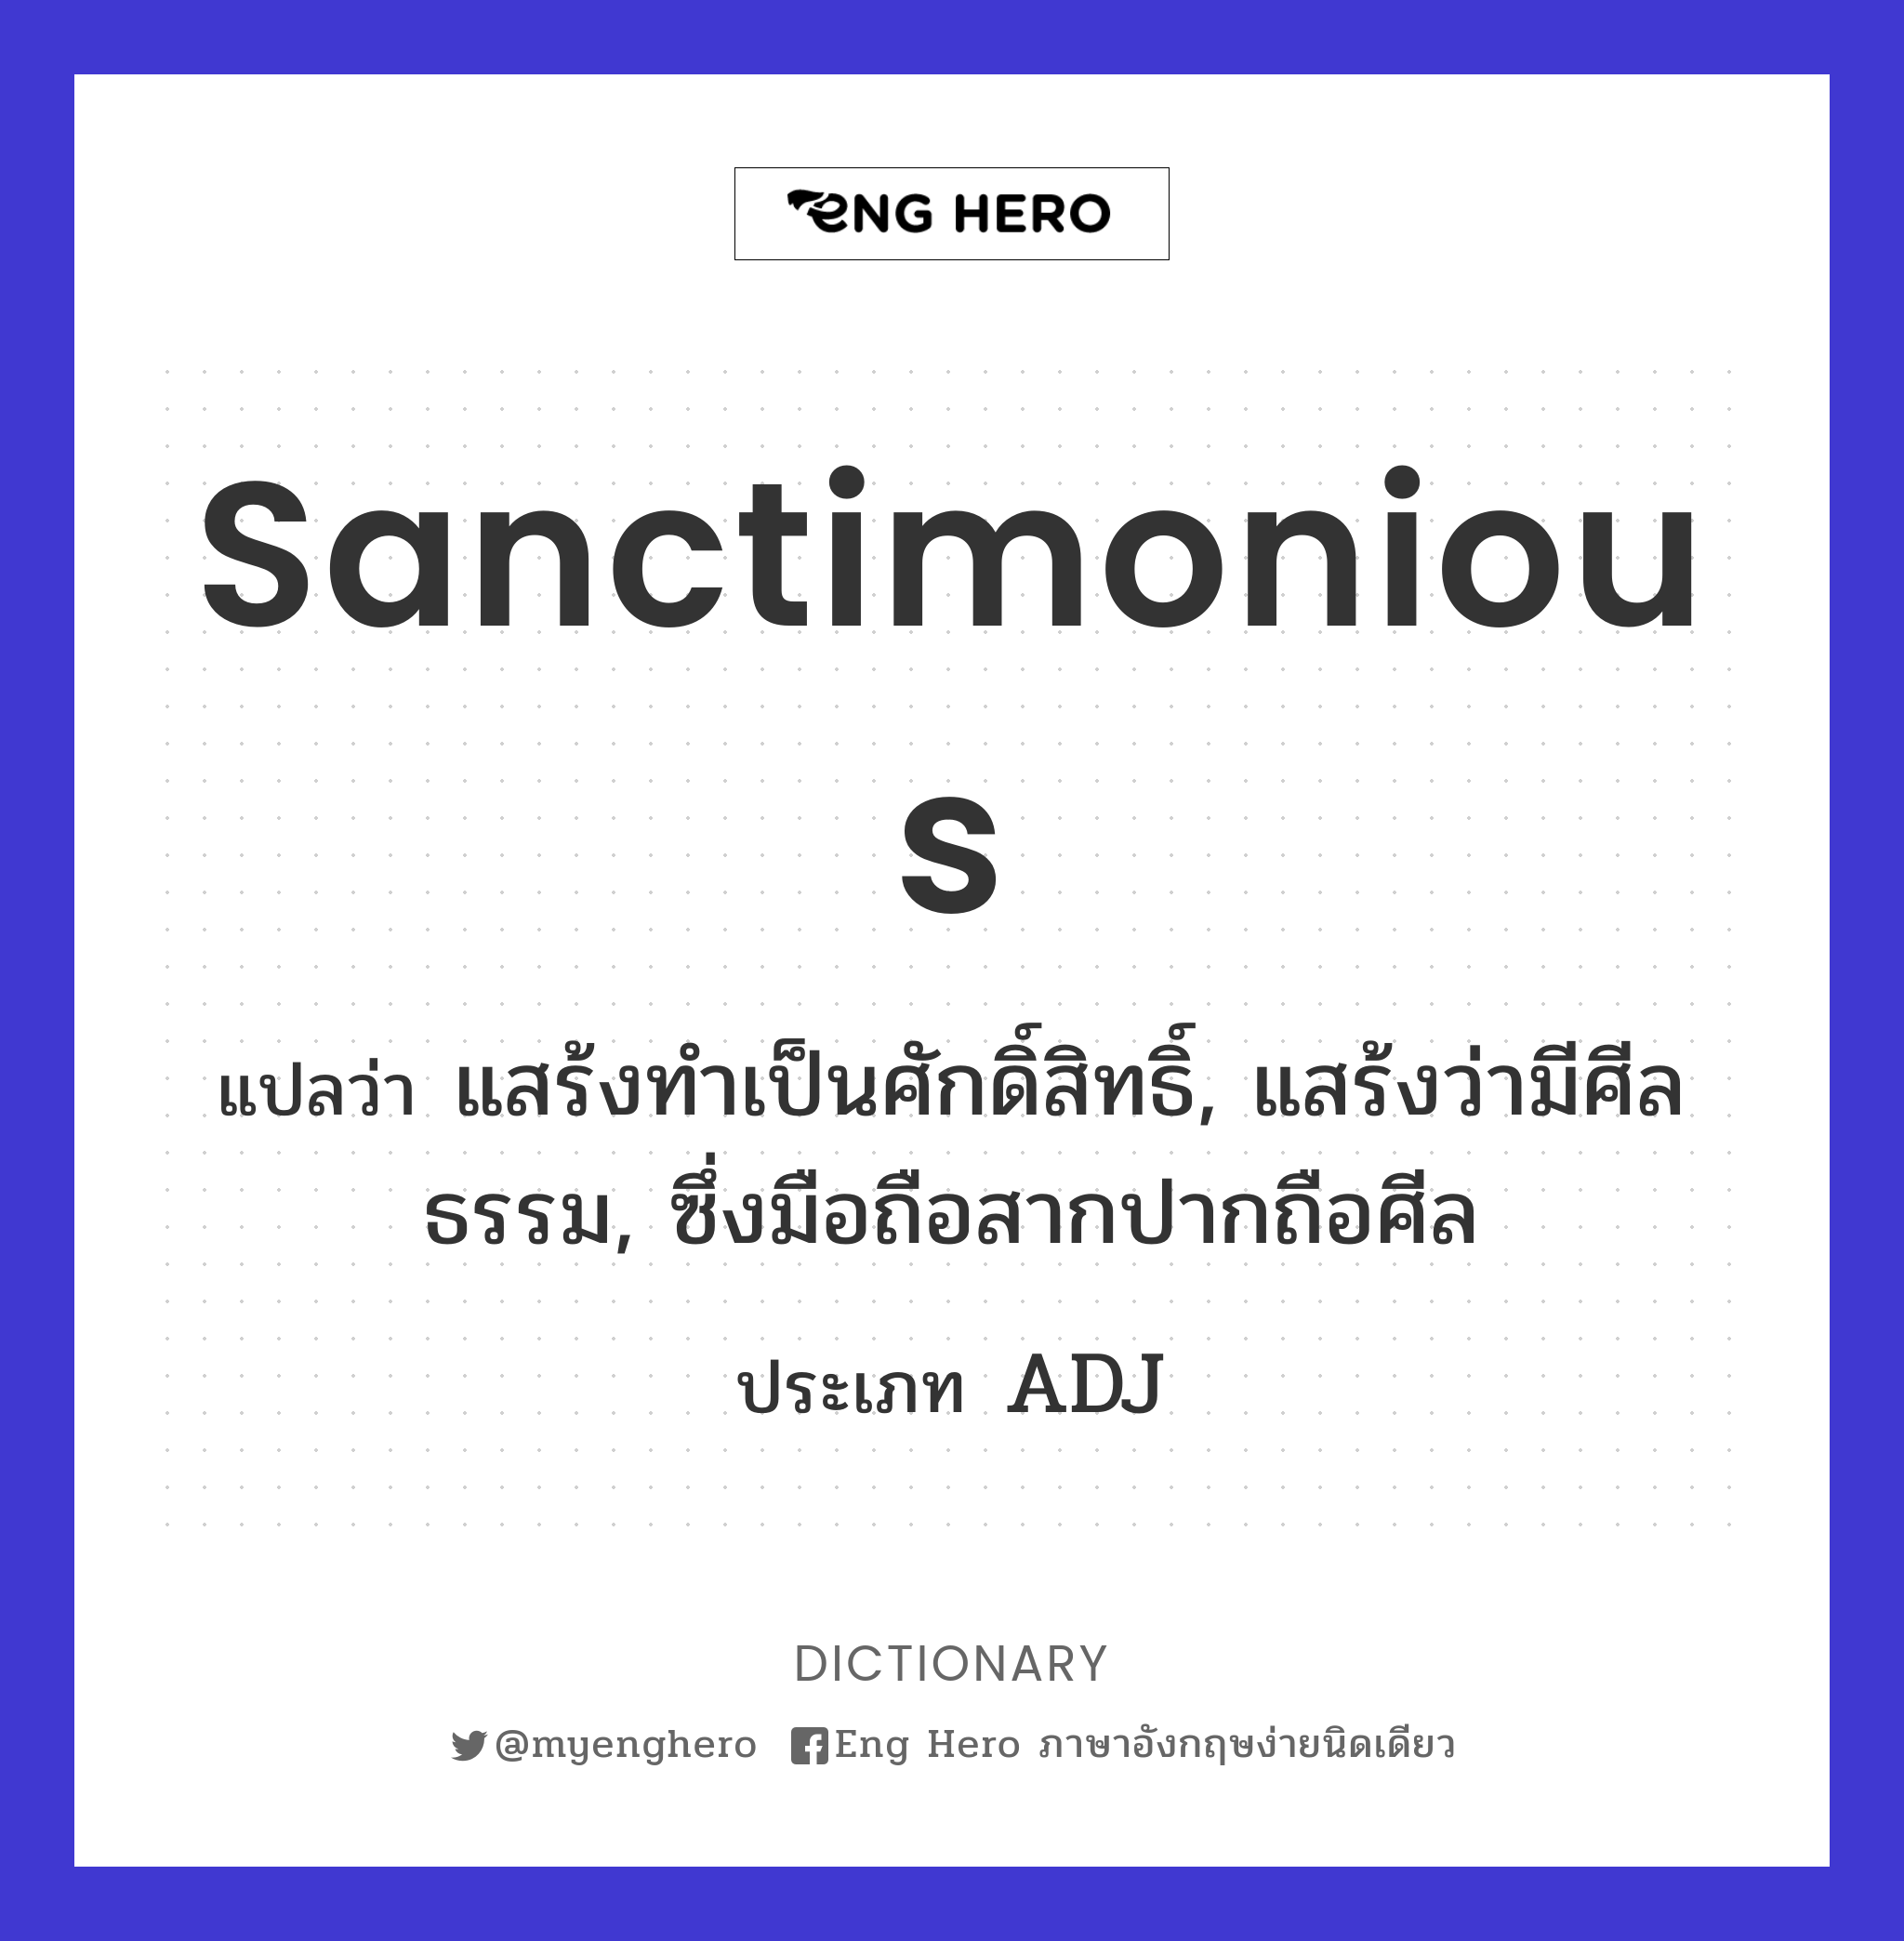 sanctimonious